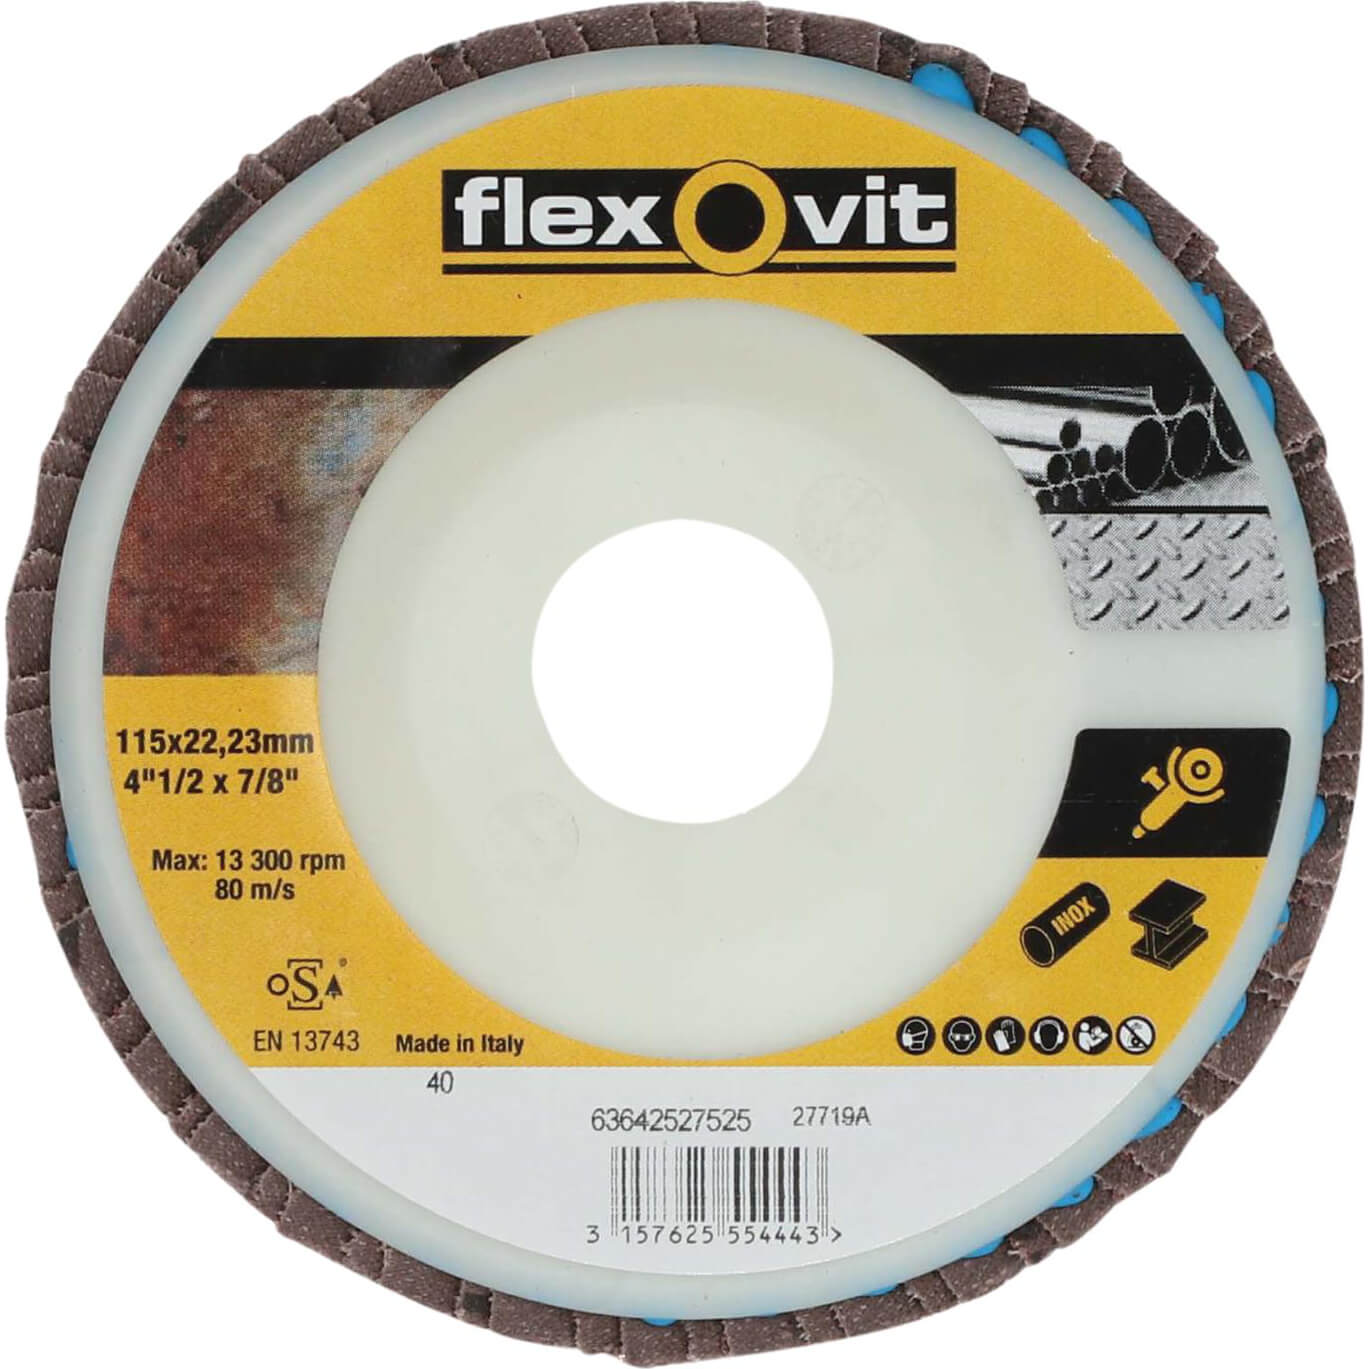 Photos - Cutting Disc Flexovit Abrasive Flap Disc 115mm 40g 27525 